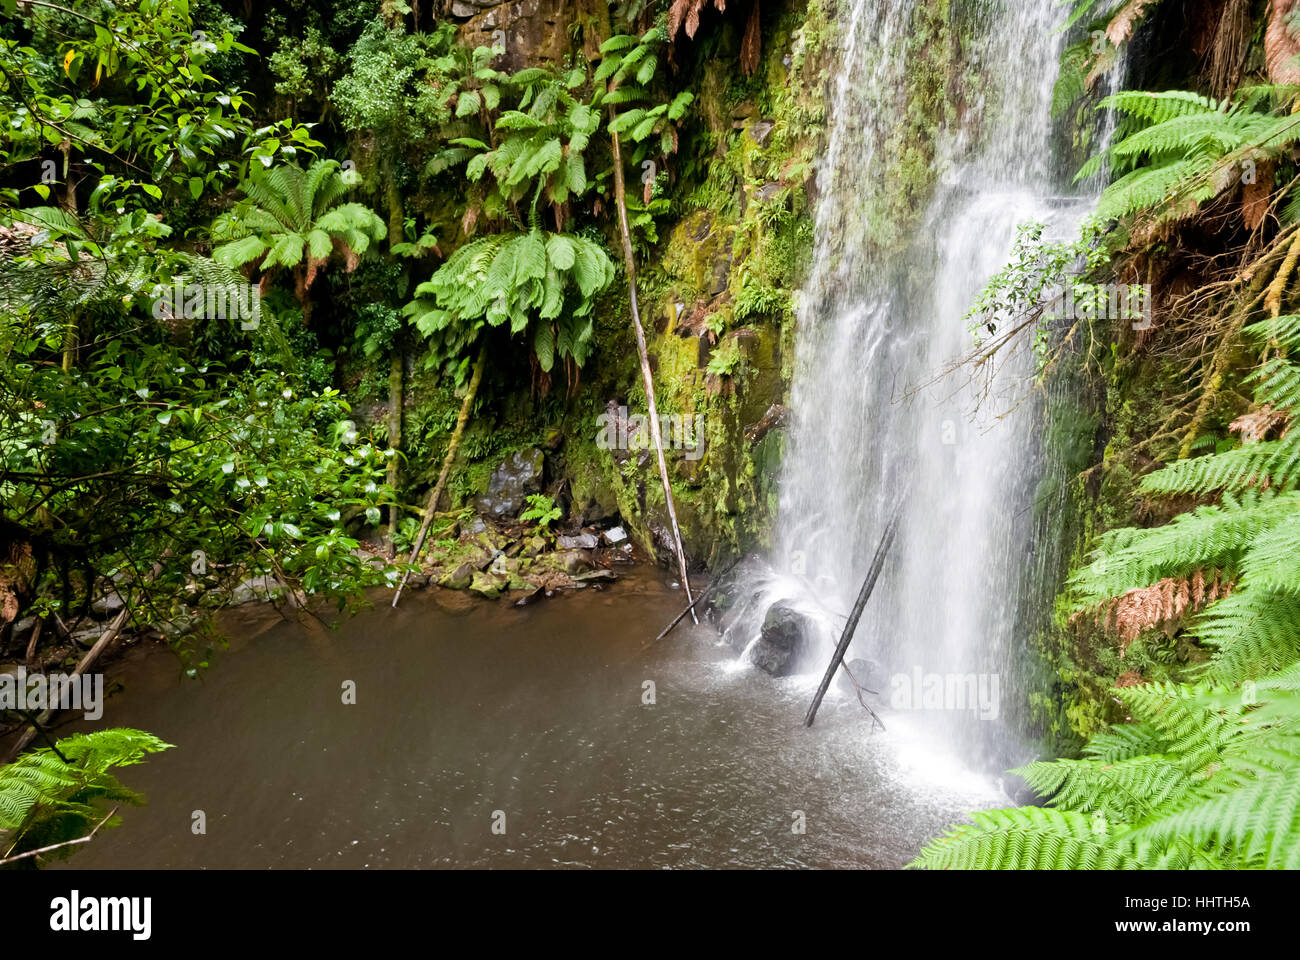 Waterfall in a green rainforest, Australia Stock Photo